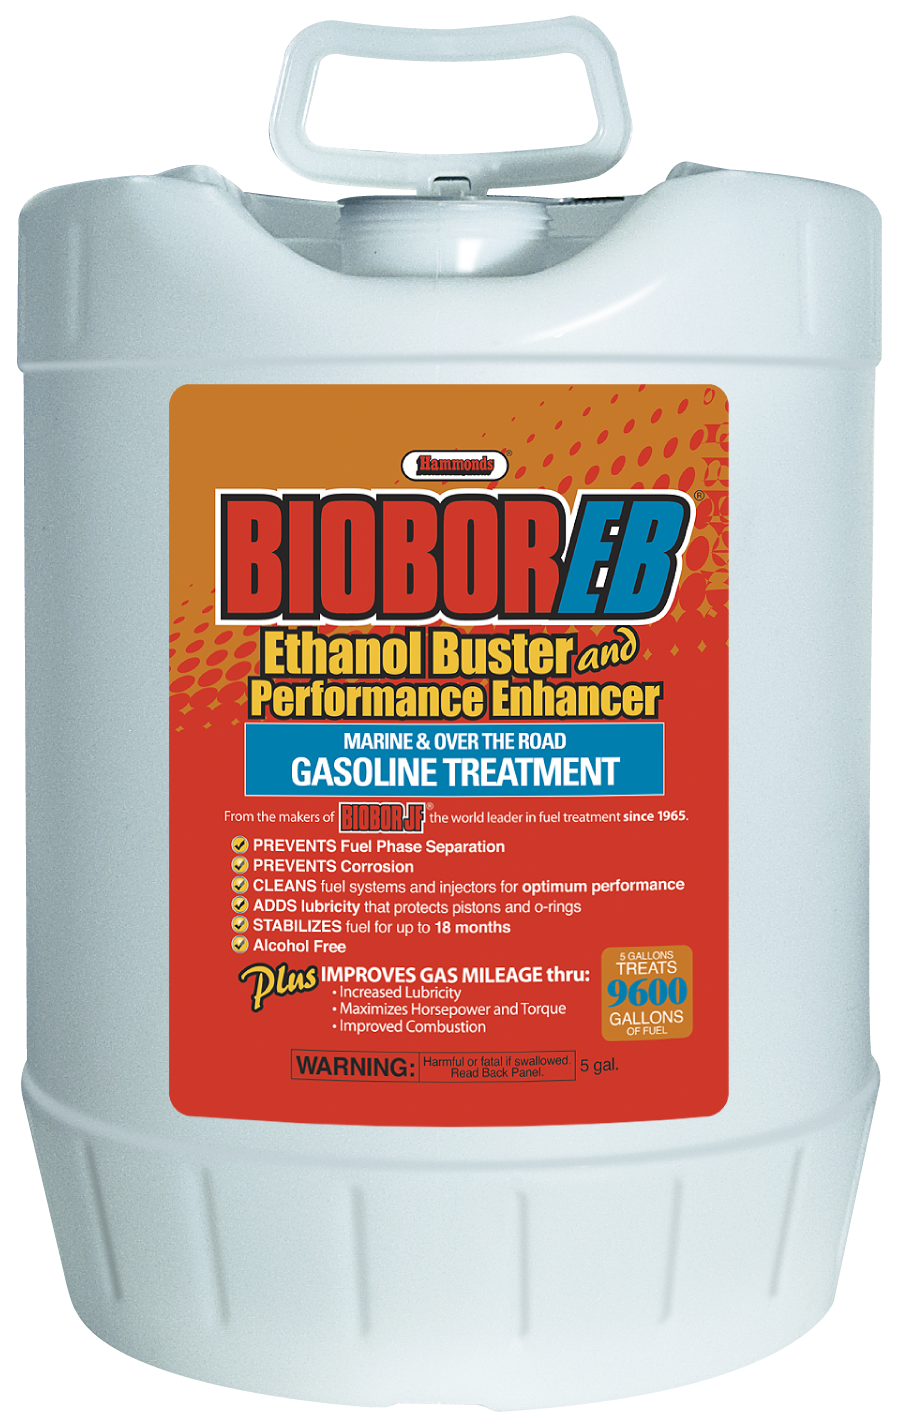 Biobor EB 5 gal. - Ethanol Buster and Performance Enhancer